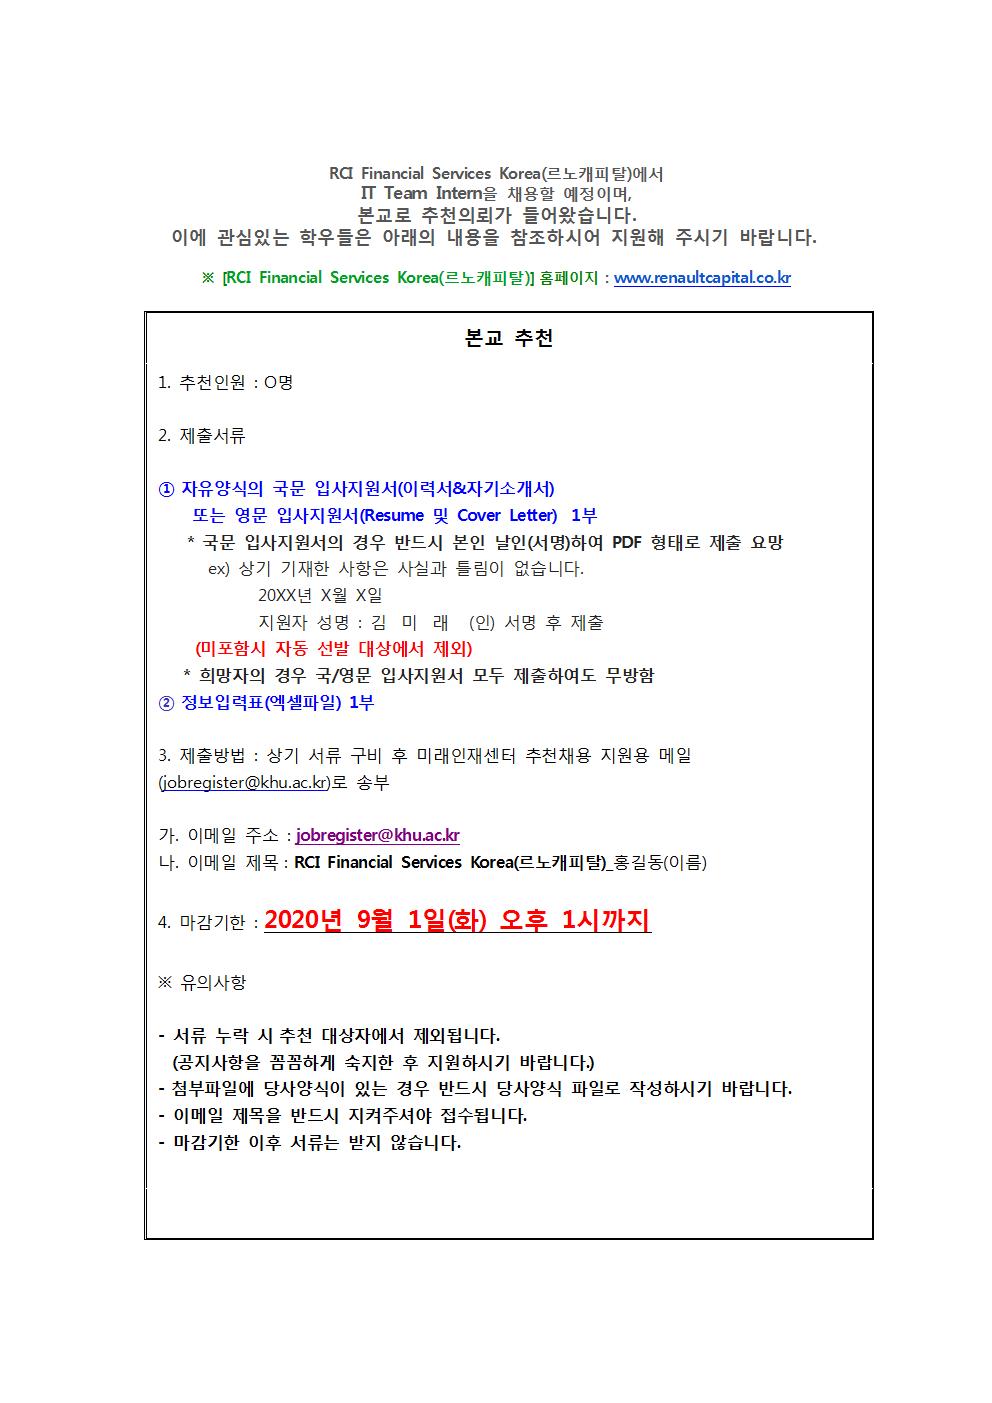 [RCI Financial Services Korea(르노캐피탈)추천채용 교내게시용001.jpg